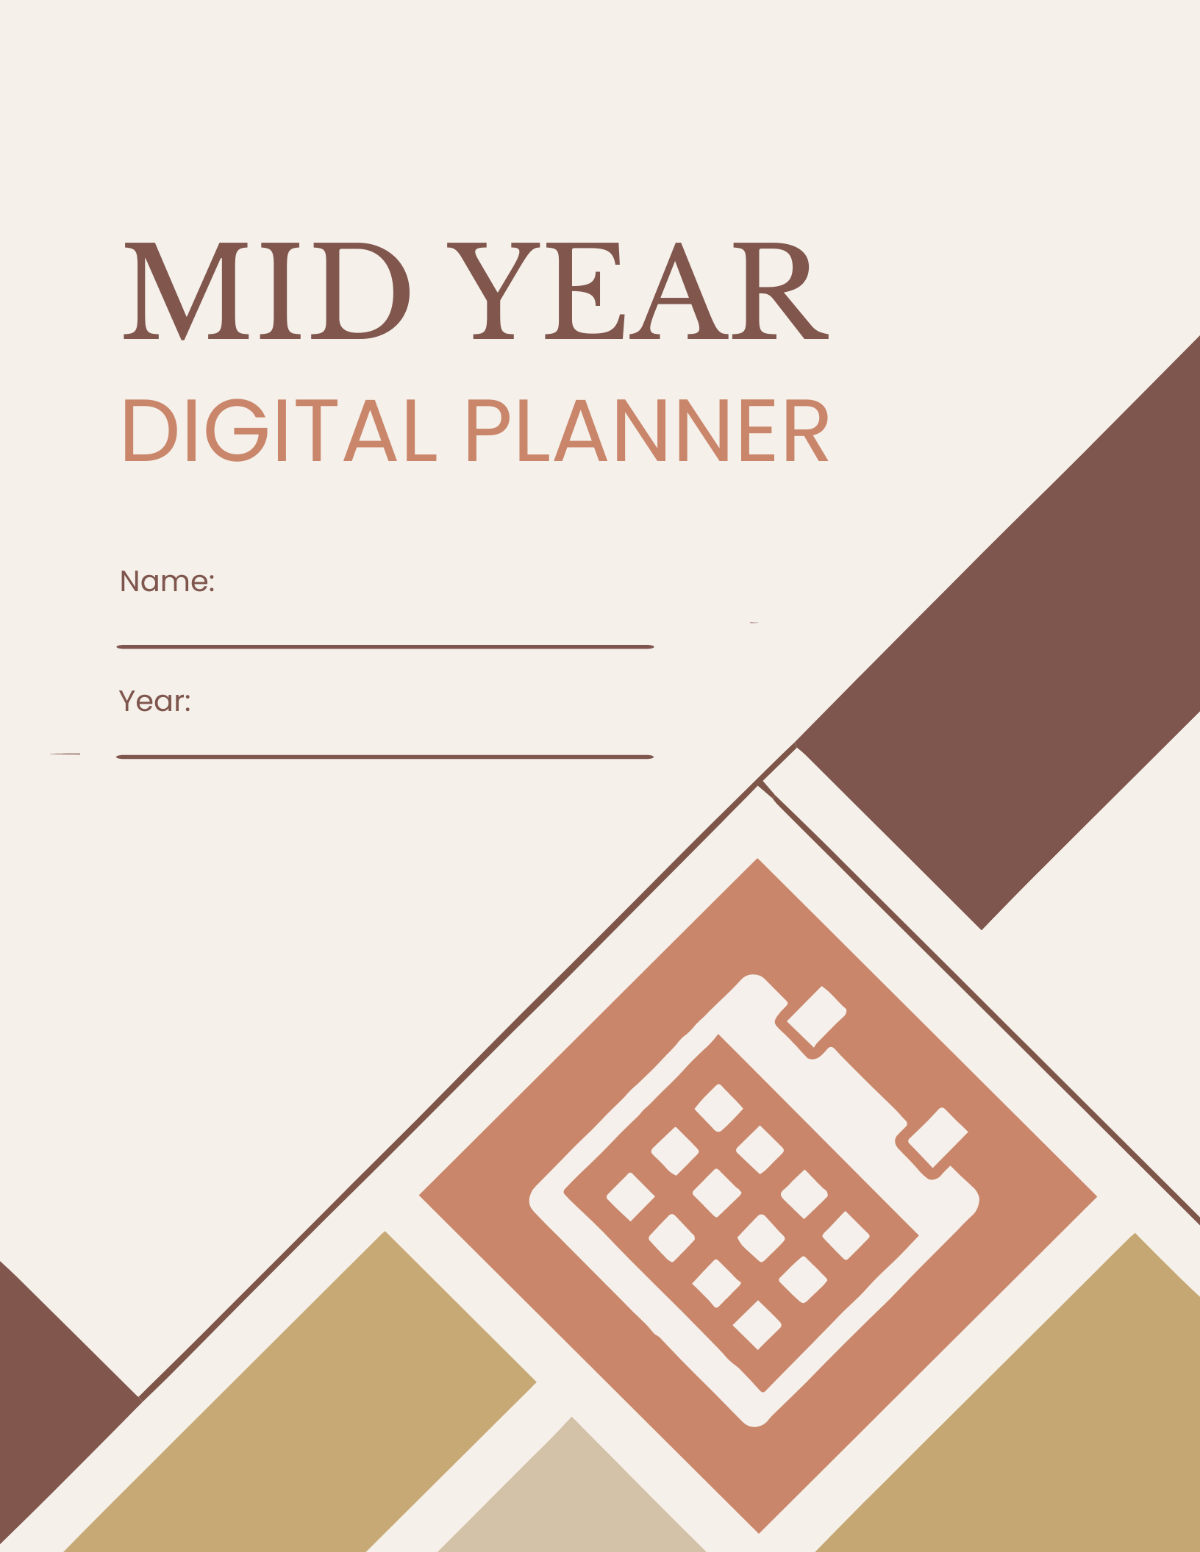 Mid Year Digital Planner Template